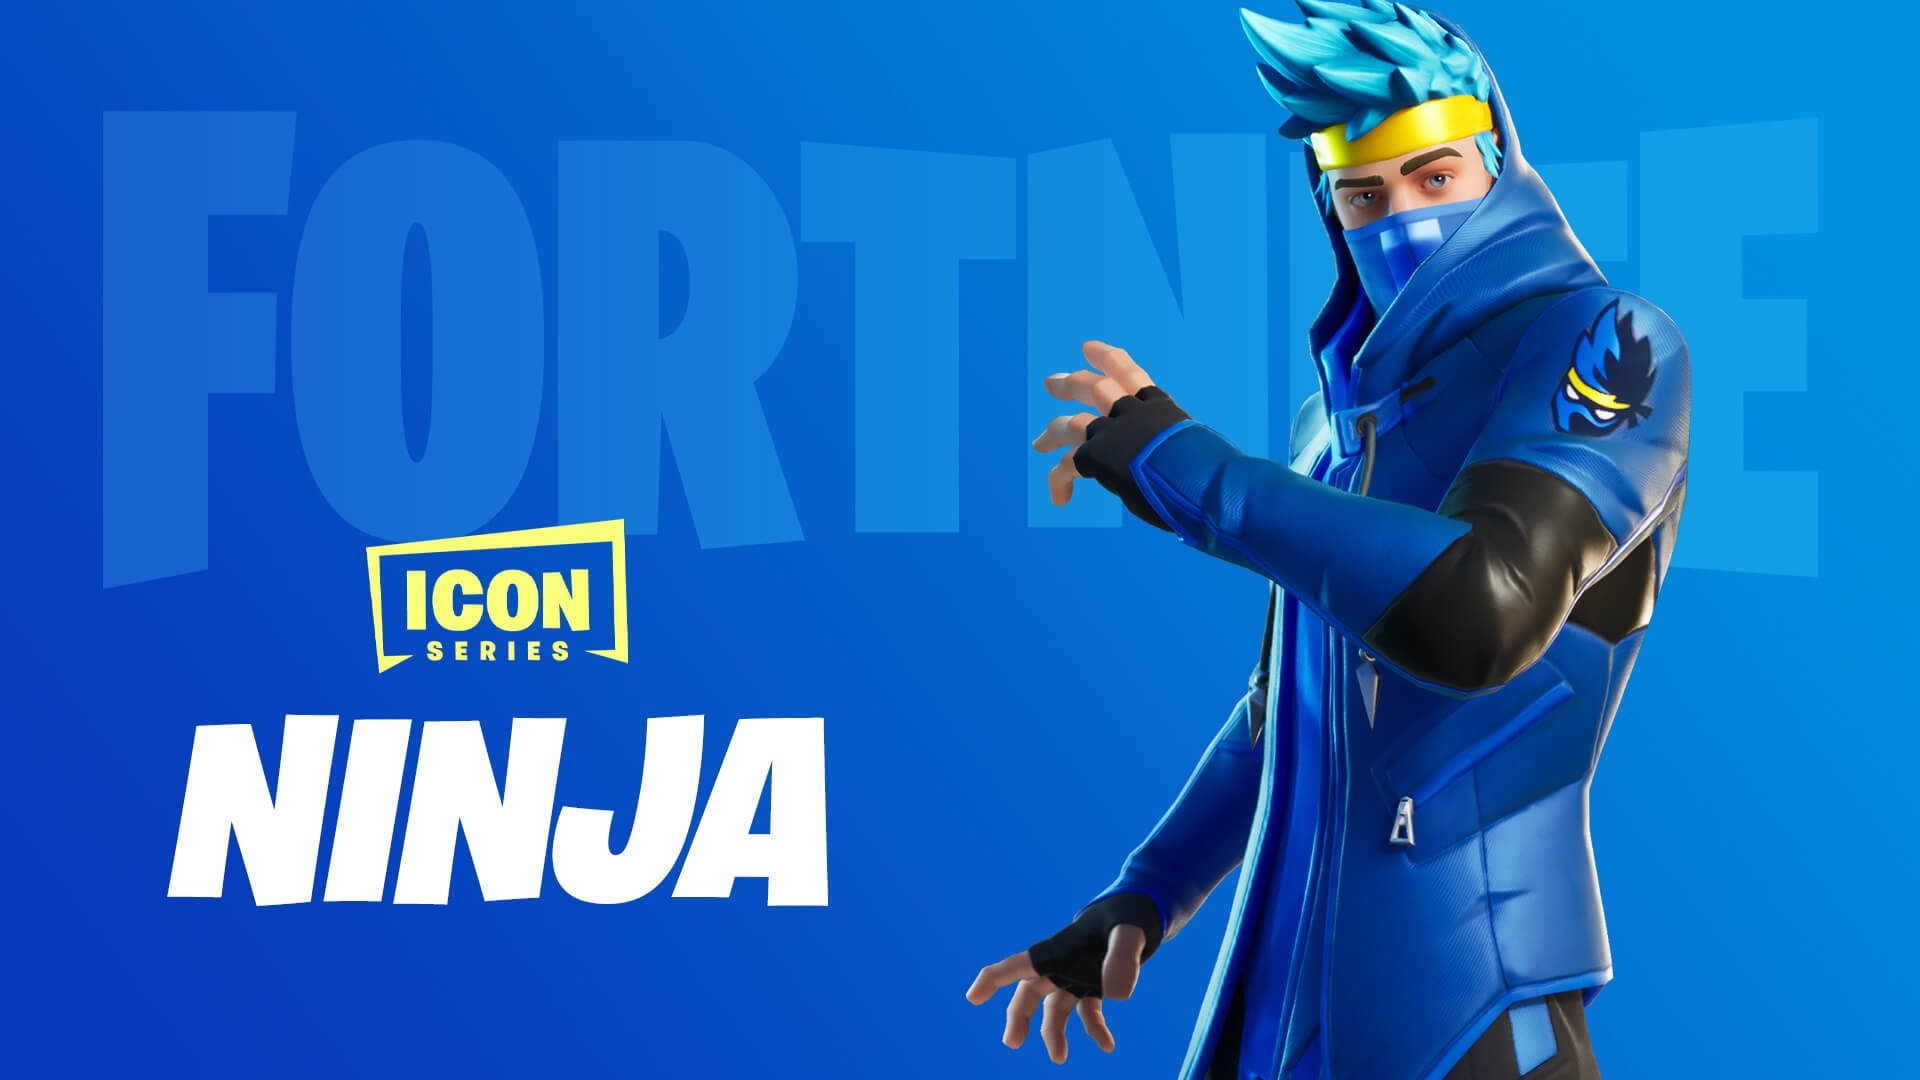 Blue Haired Ninja in Fortnite - wide 9